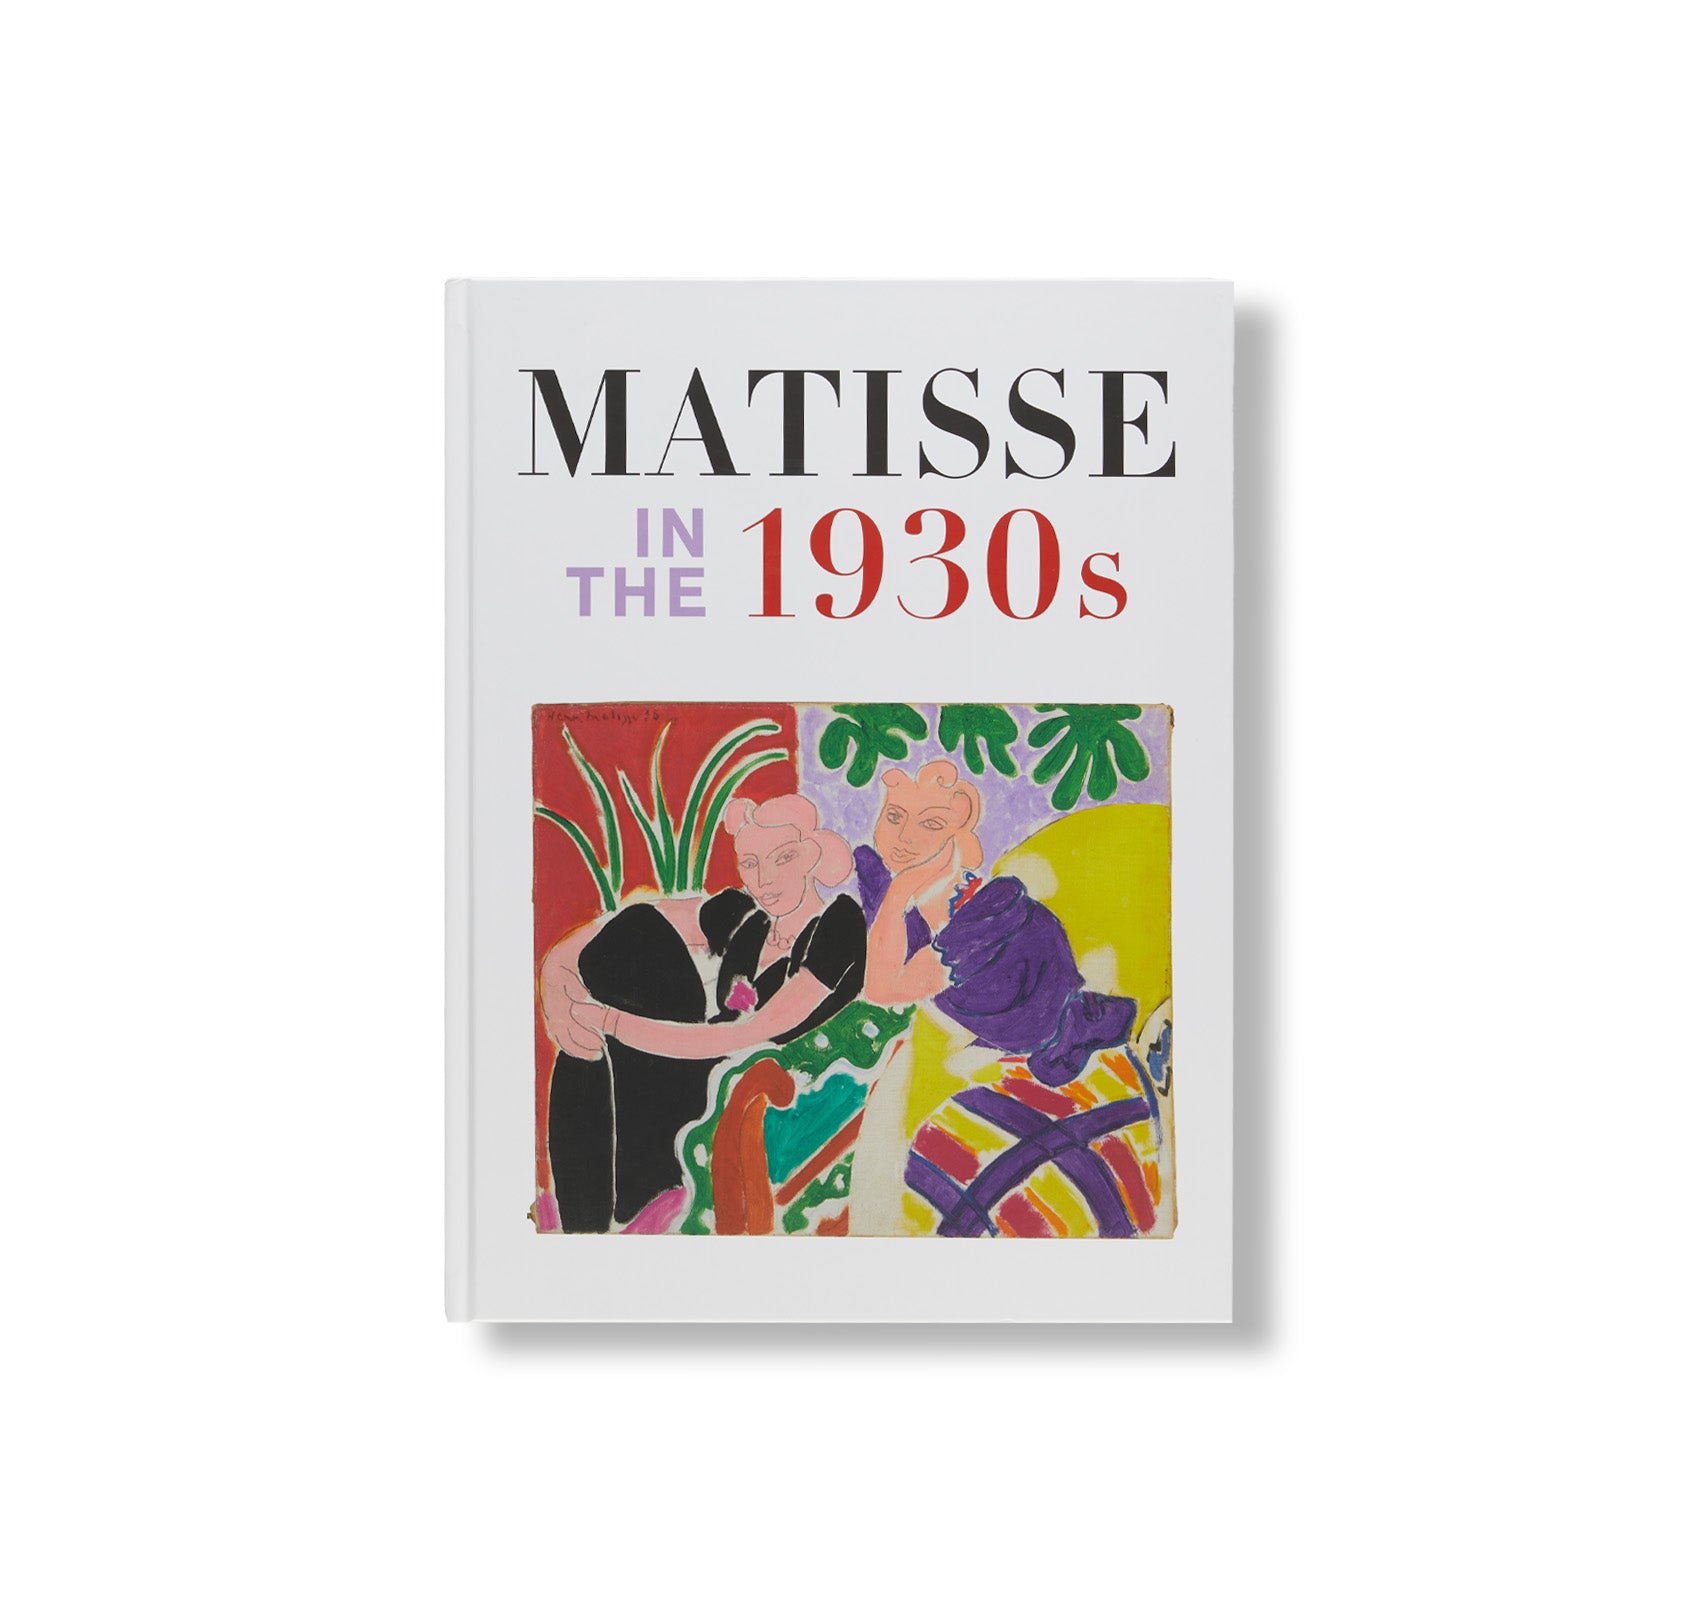 MATISSE IN THE 1930S by Henri Matisse – twelvebooks